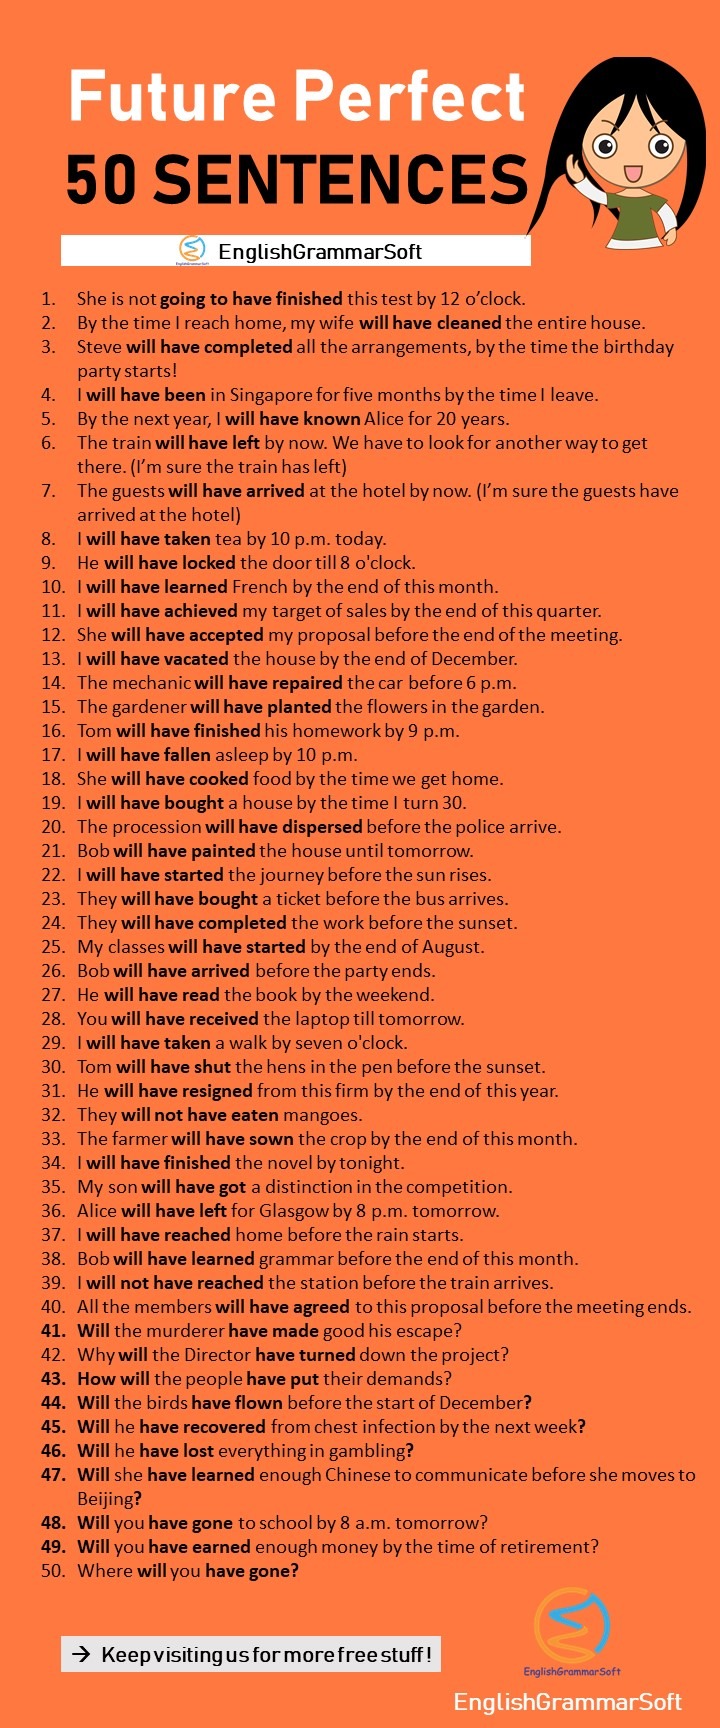 Future Perfect Tense Sentences - 50 Examples